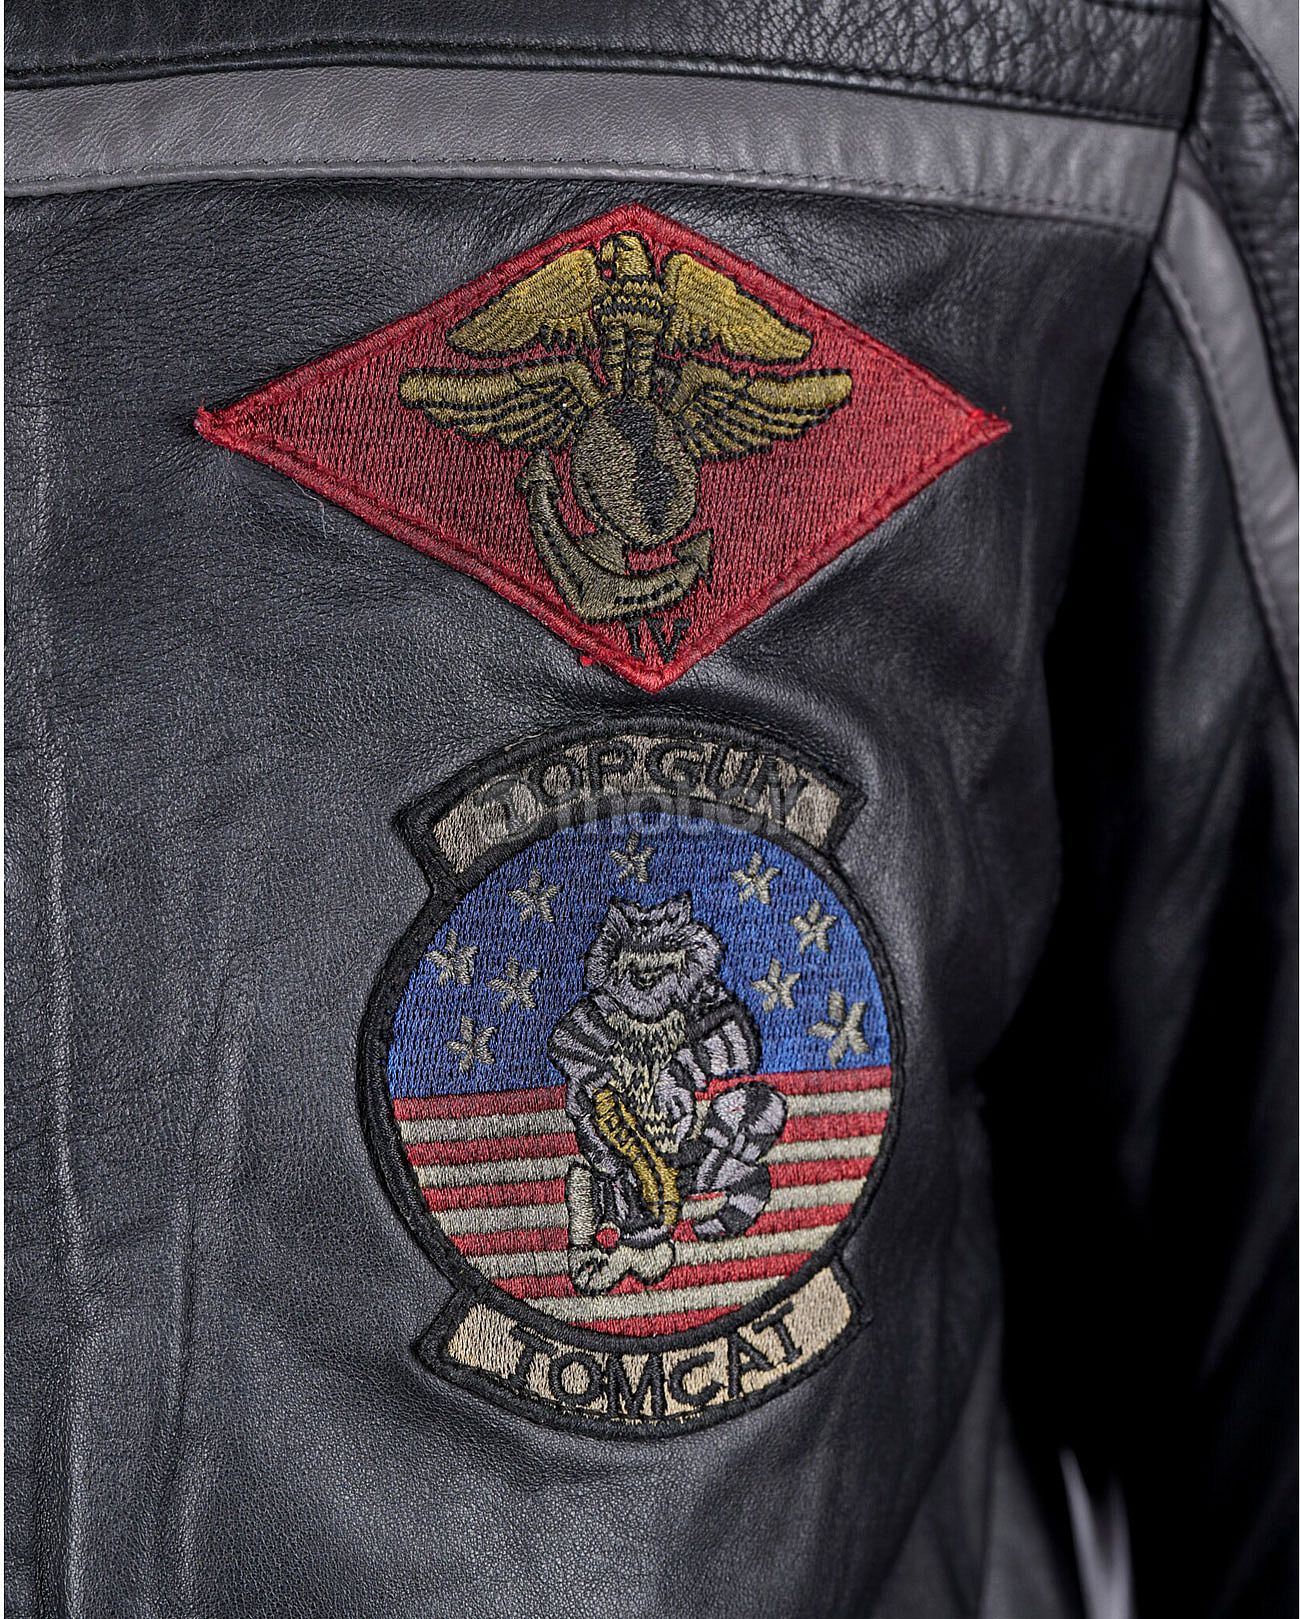 Top Gun Racing, leather jacket